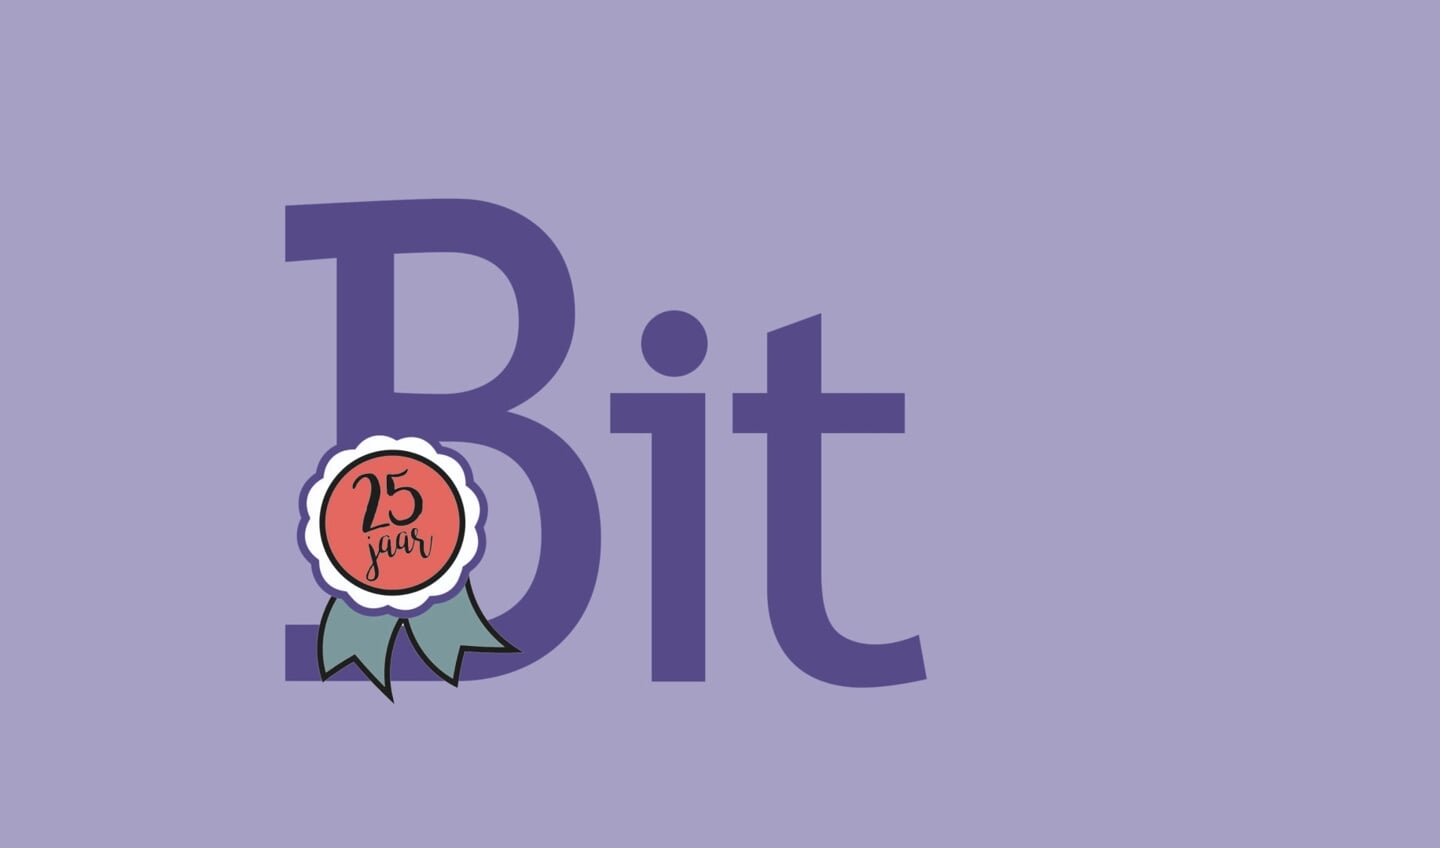 Bit Logo (paars) 25 jaarDEF-04